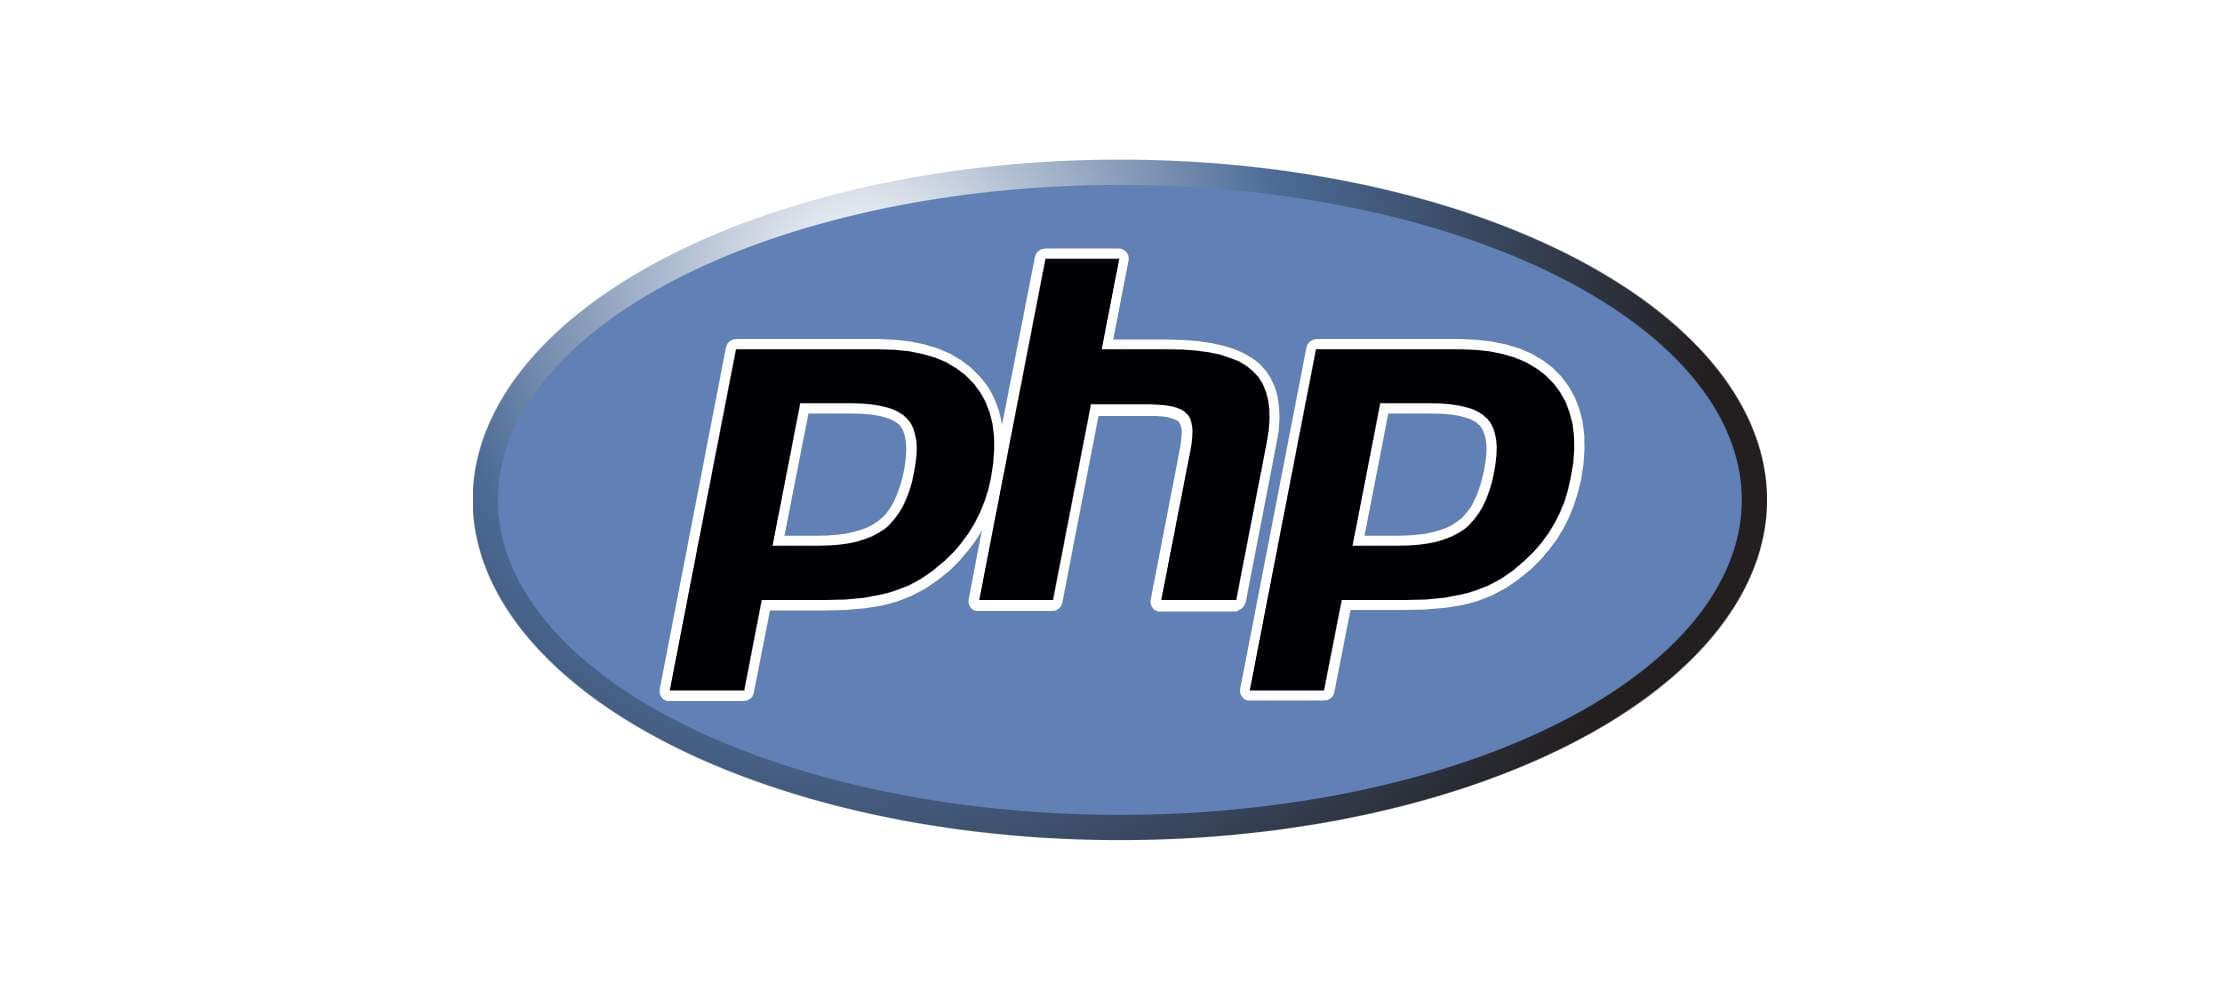 Formation PHP à distance